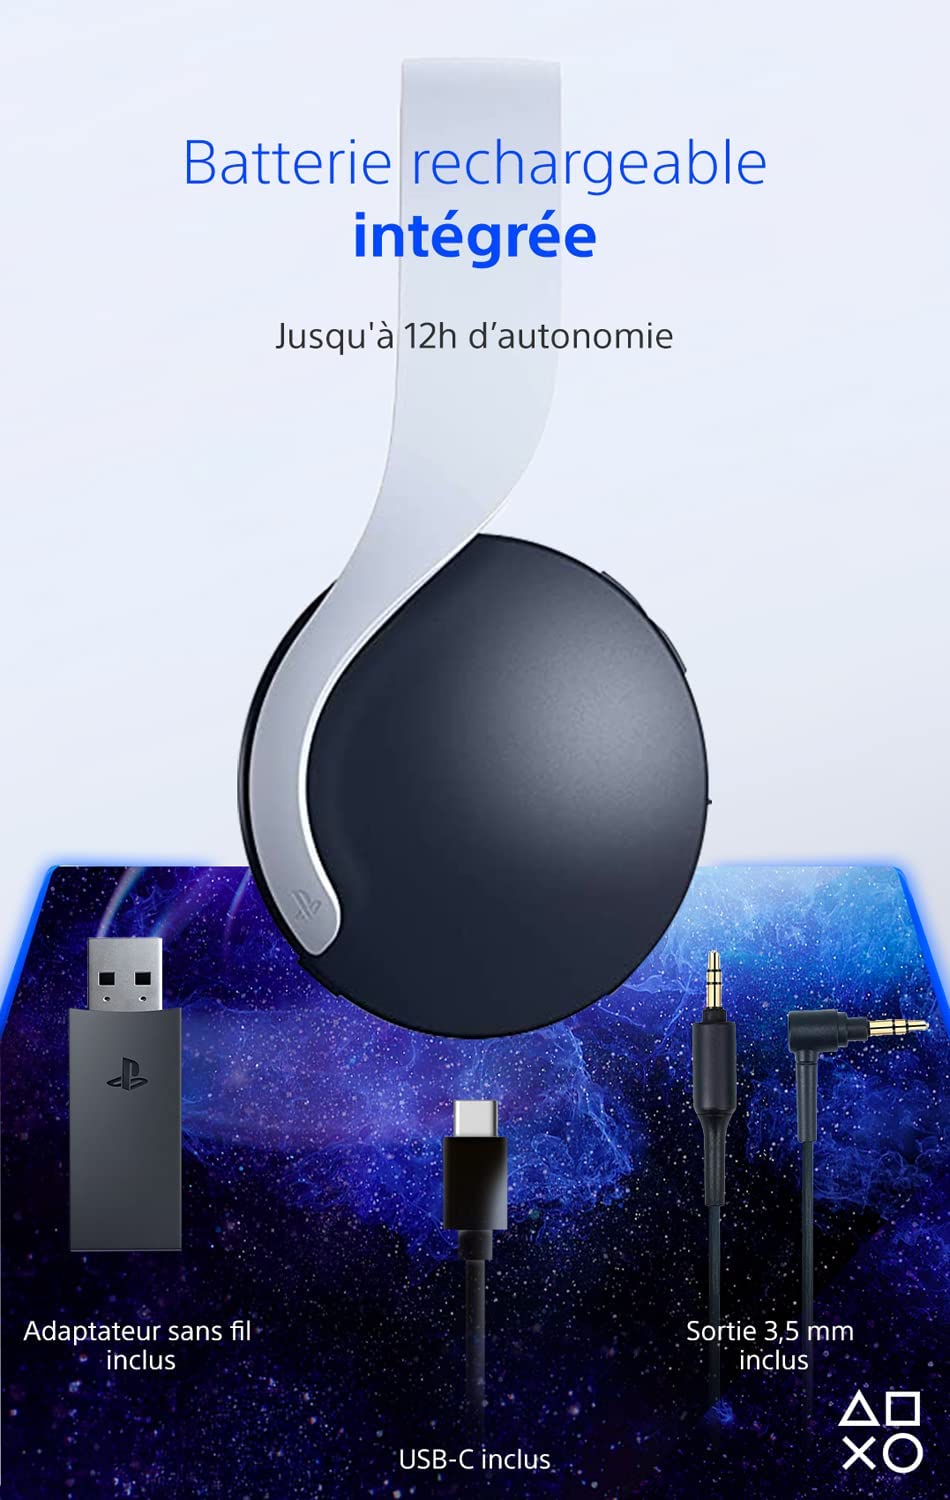 PULSE 3D - Sony Casque-micro sans fil, Noir - Sony